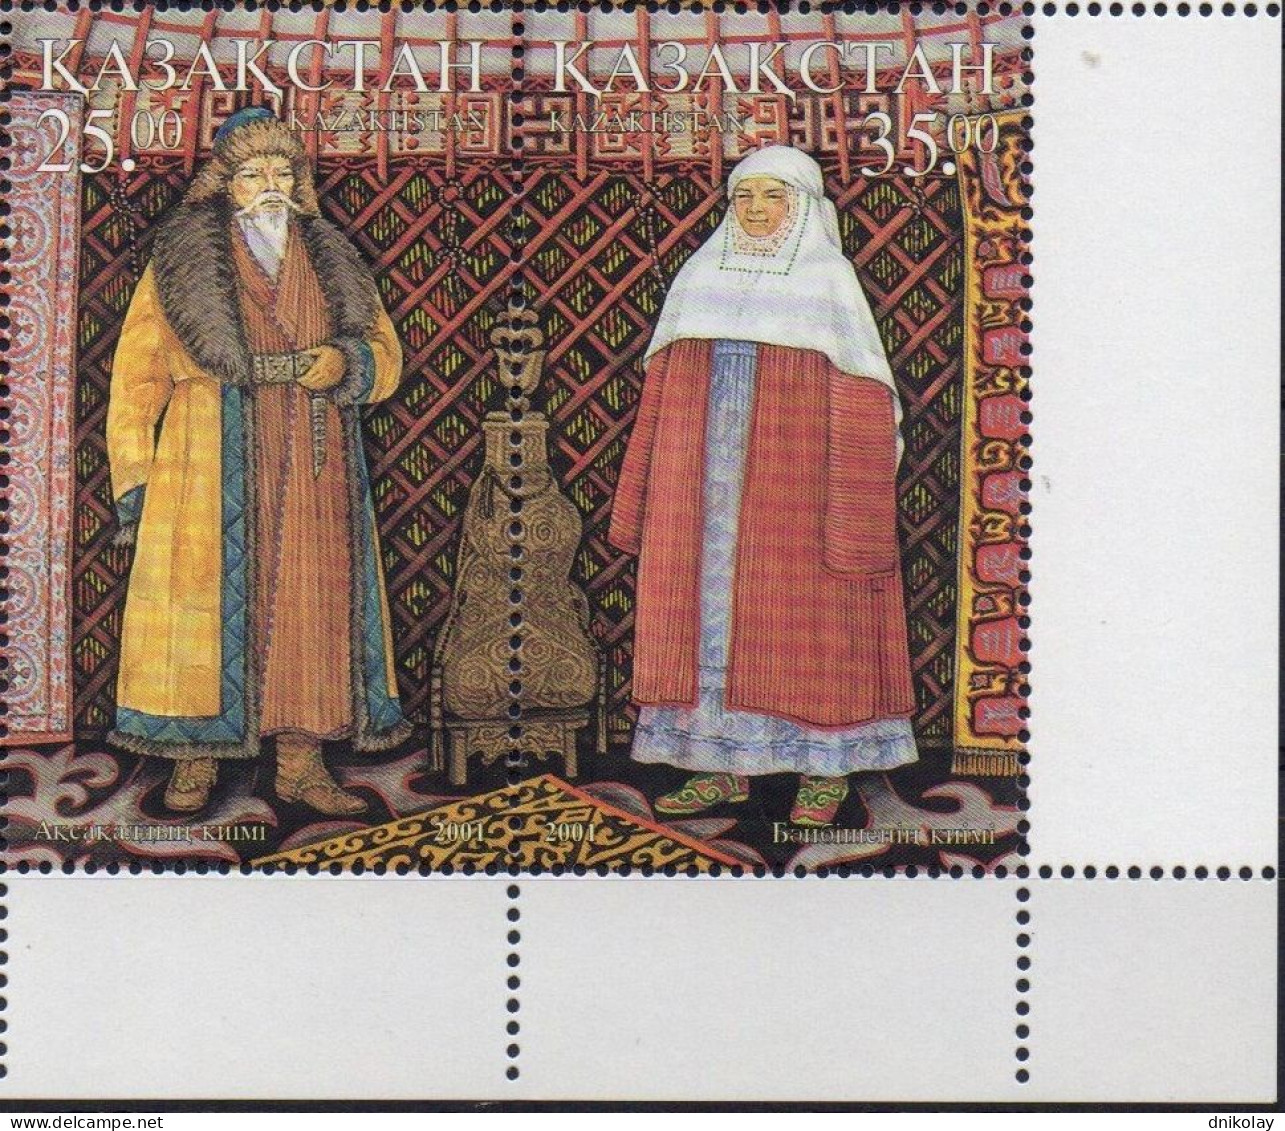 2001 362 Kazakhstan Traditional Costumes MNH - Kasachstan